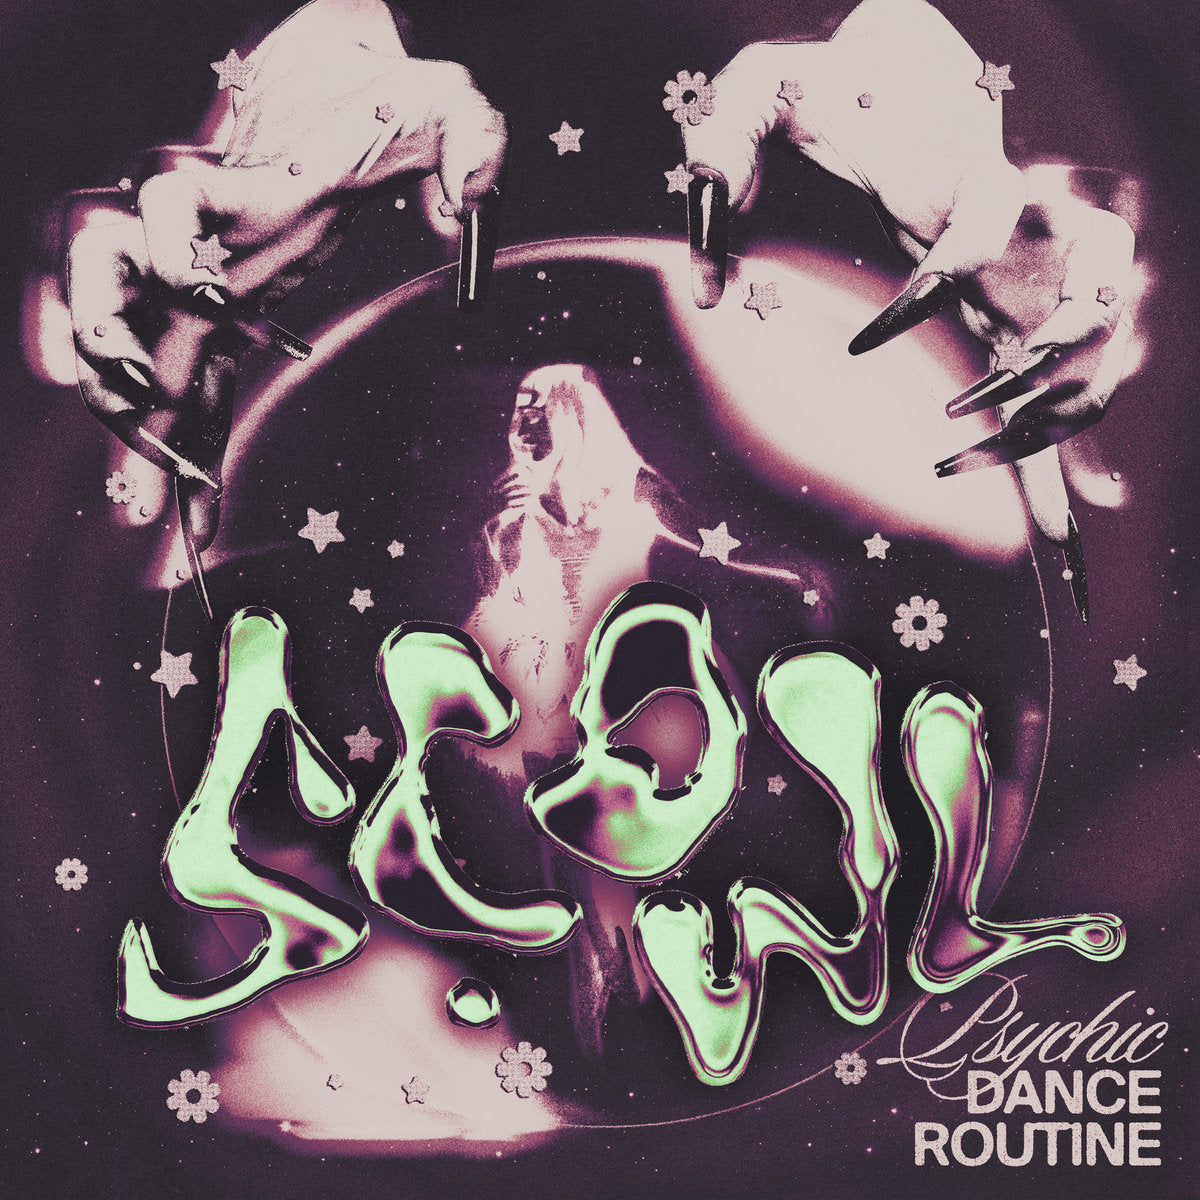 Scowl  "Psychic Dance Routine" LP